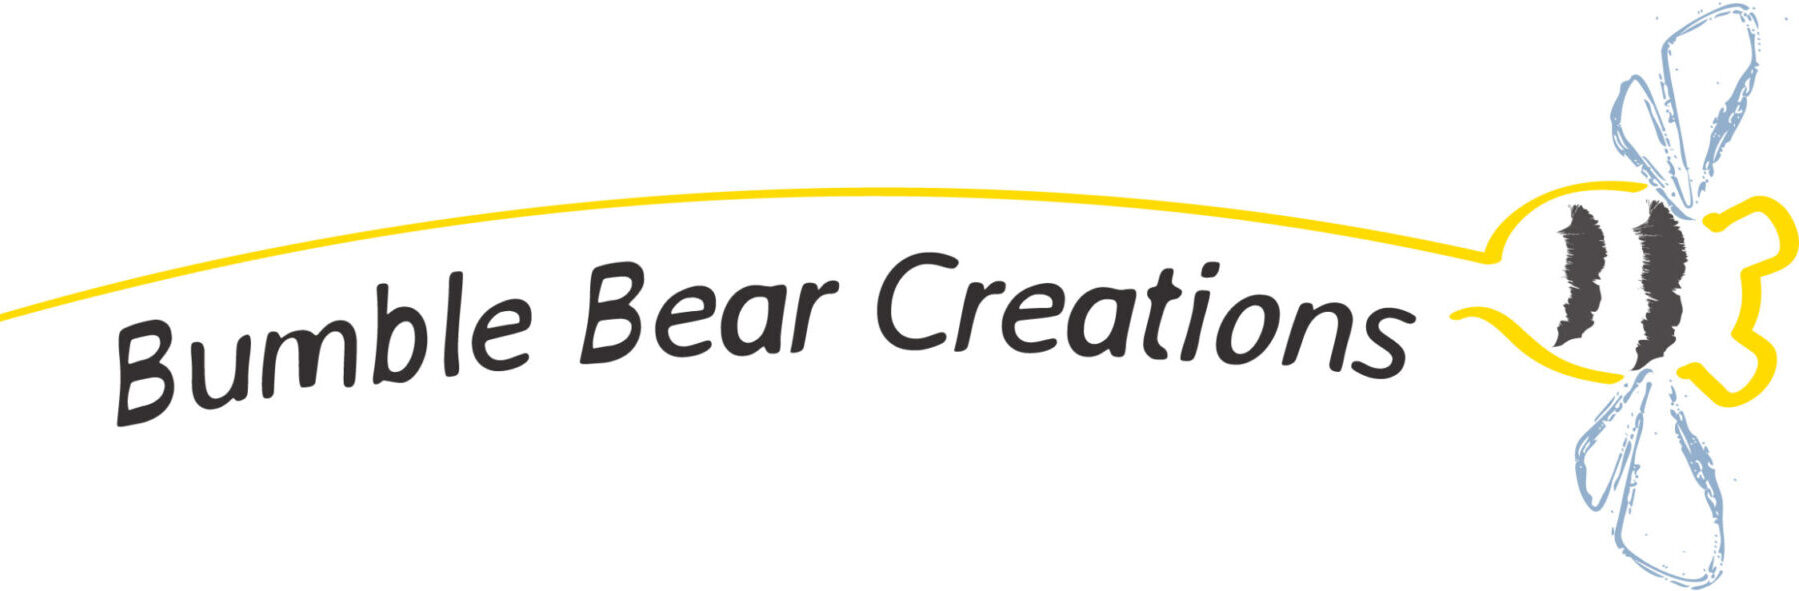 Bumble Bear Creations